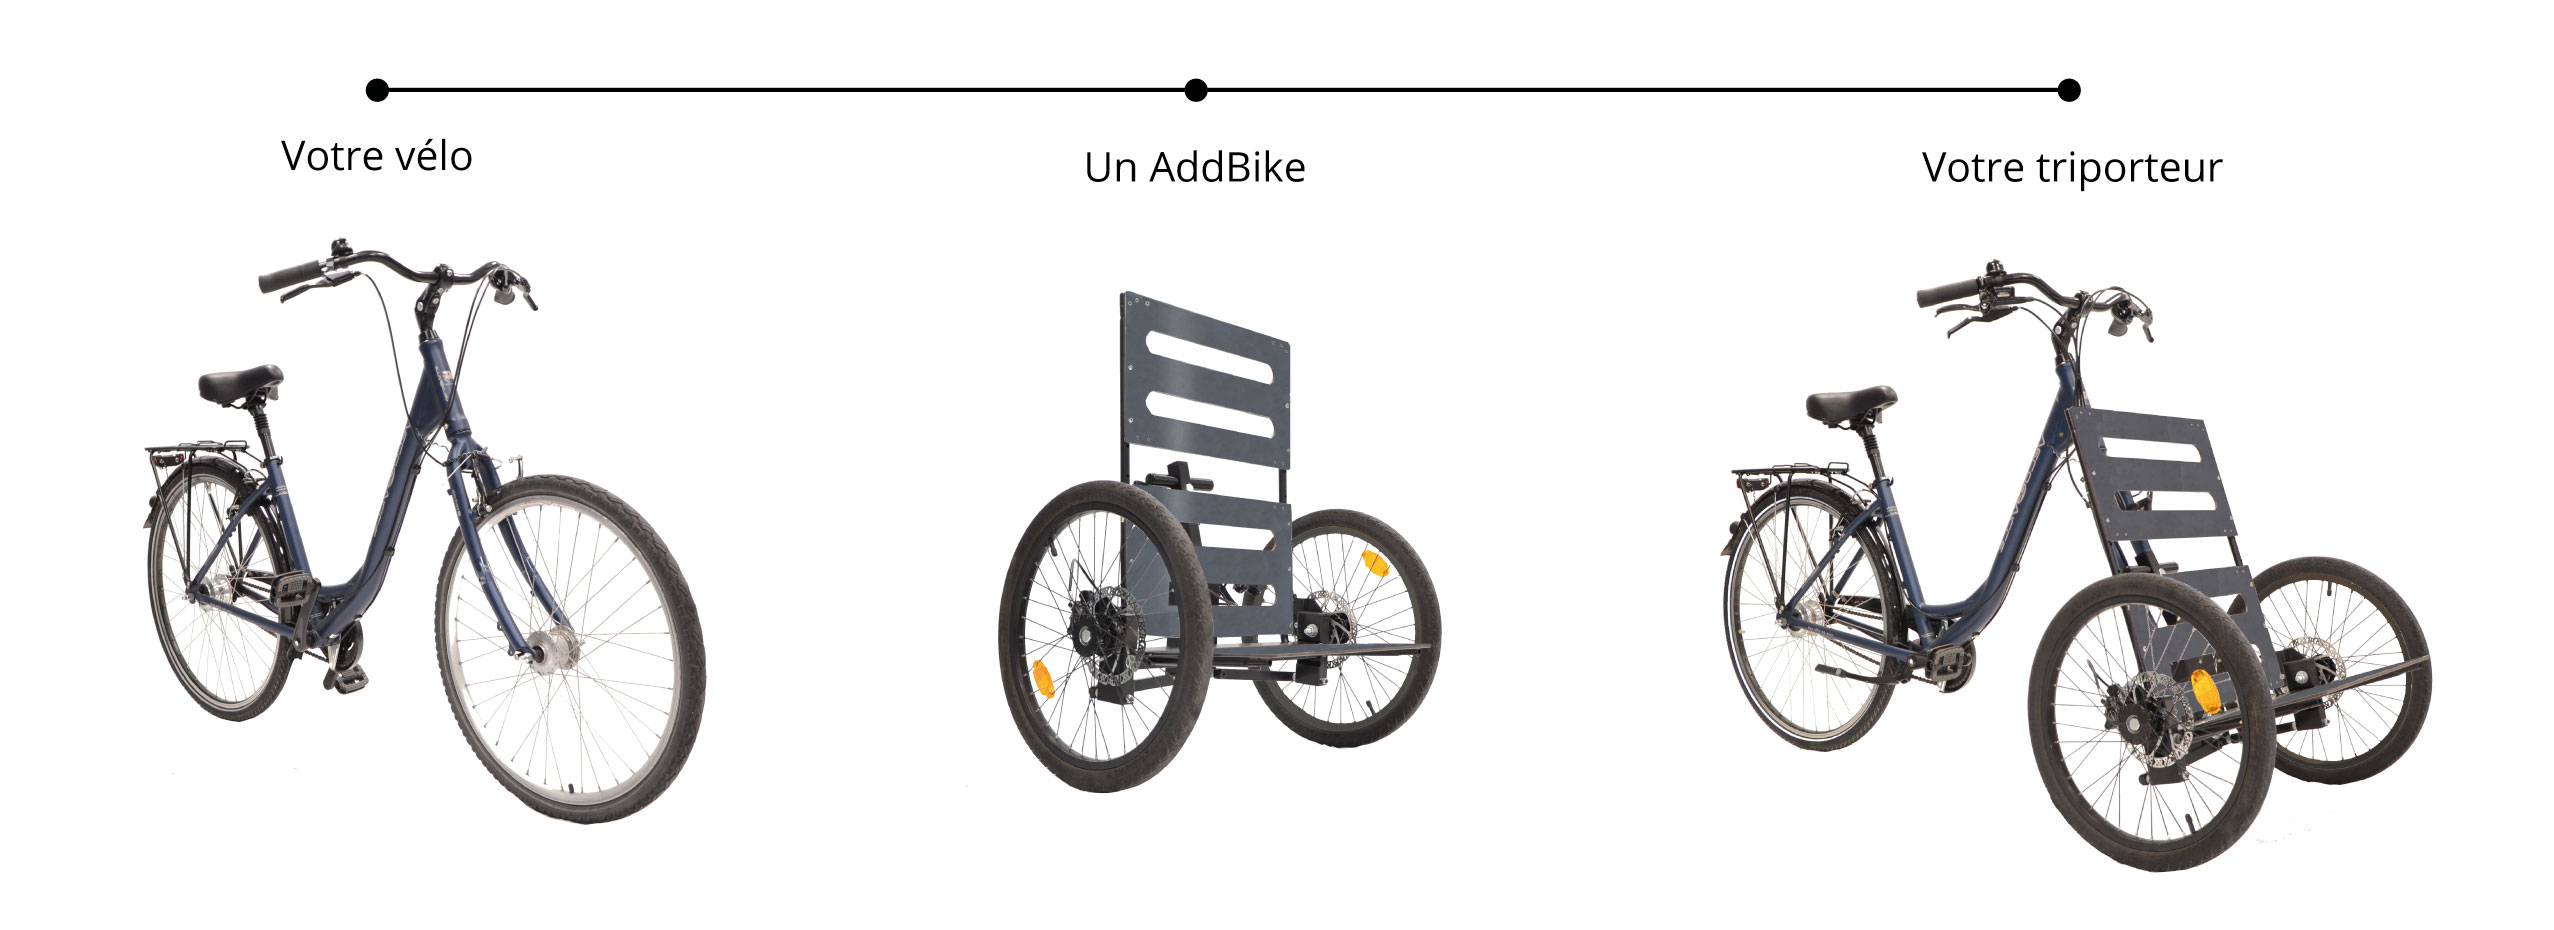 Transformation facile de vélo classique à vélo cargo